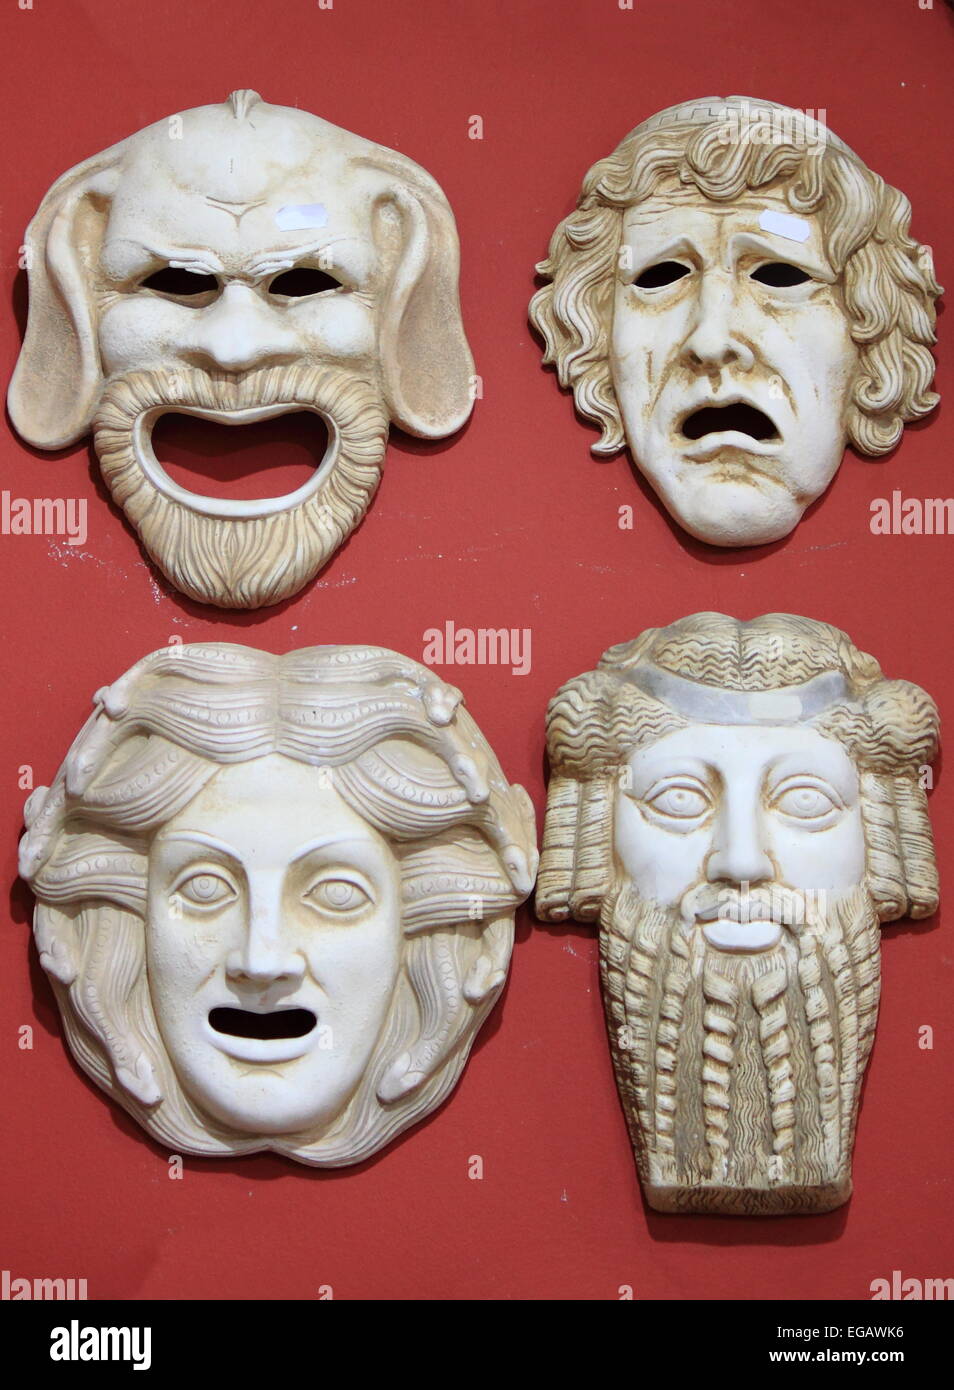 https://c8.alamy.com/comp/EGAWK6/ancient-greece-theatre-masks-in-marble-stone-EGAWK6.jpg